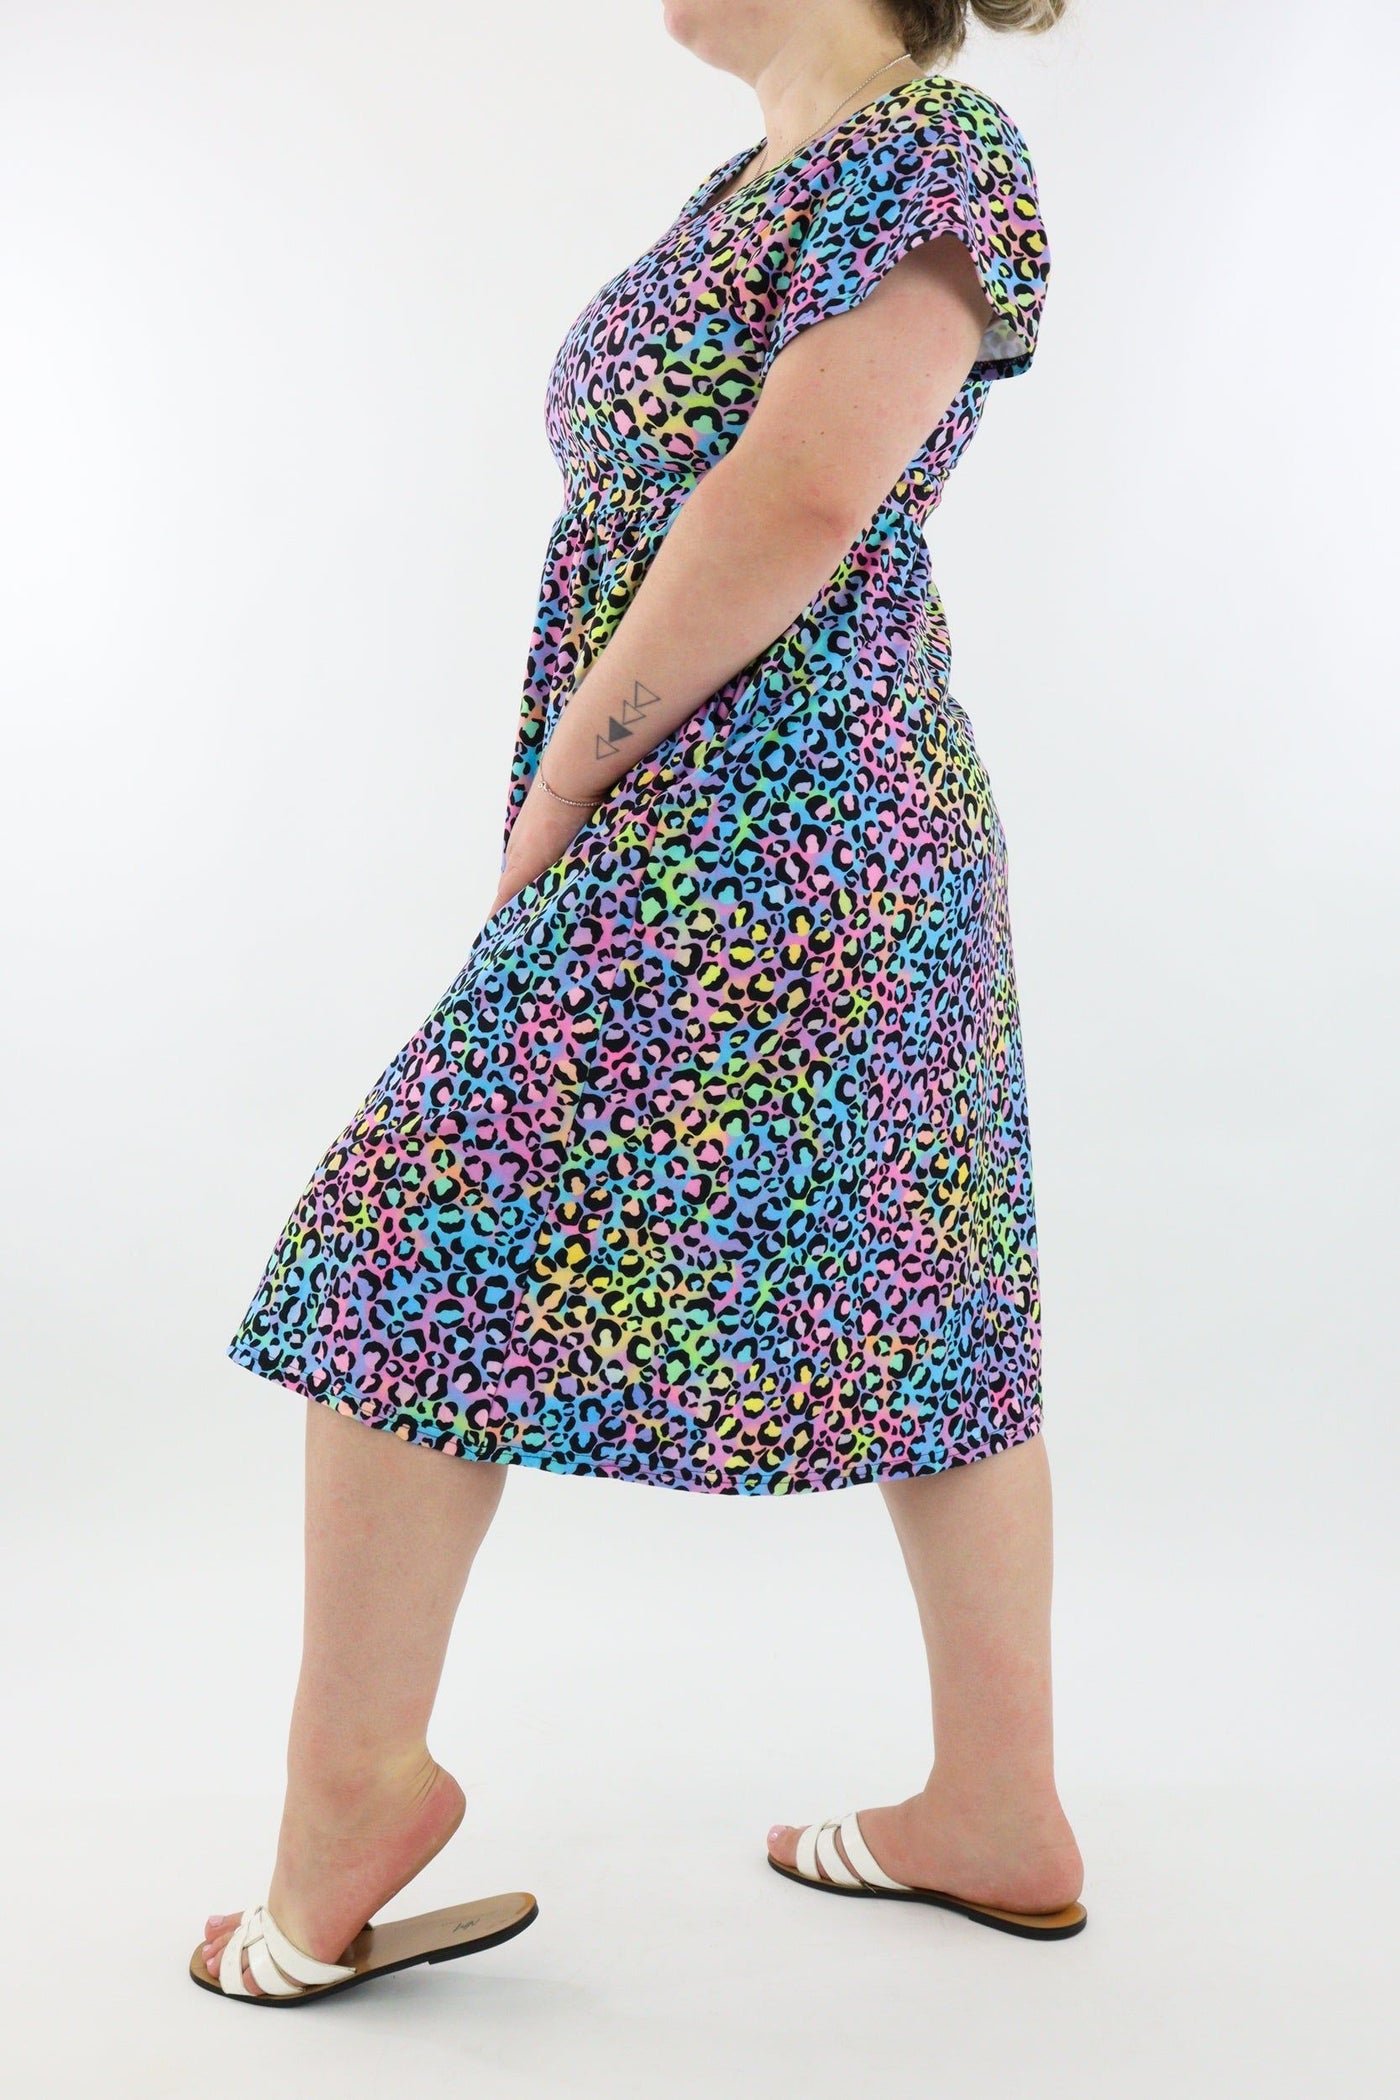 Vivid Leopard - A-Line Dress - Midi Length - Side Pockets - Pawlie